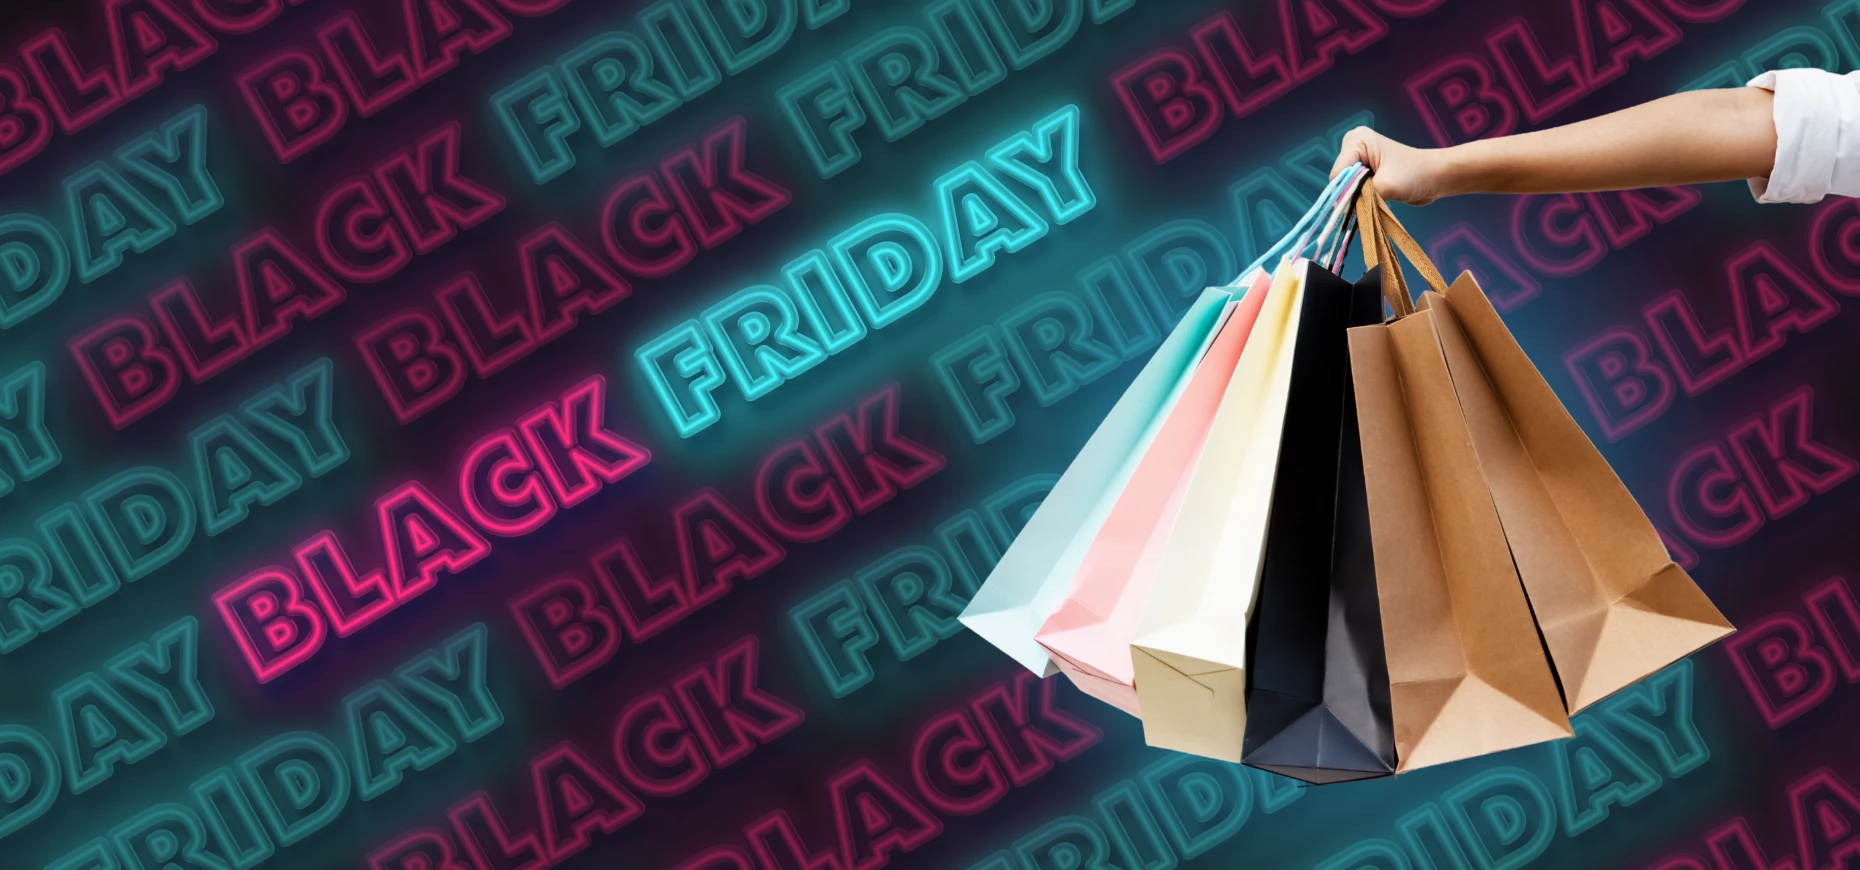 Black Friday offers on B2B marketing start today